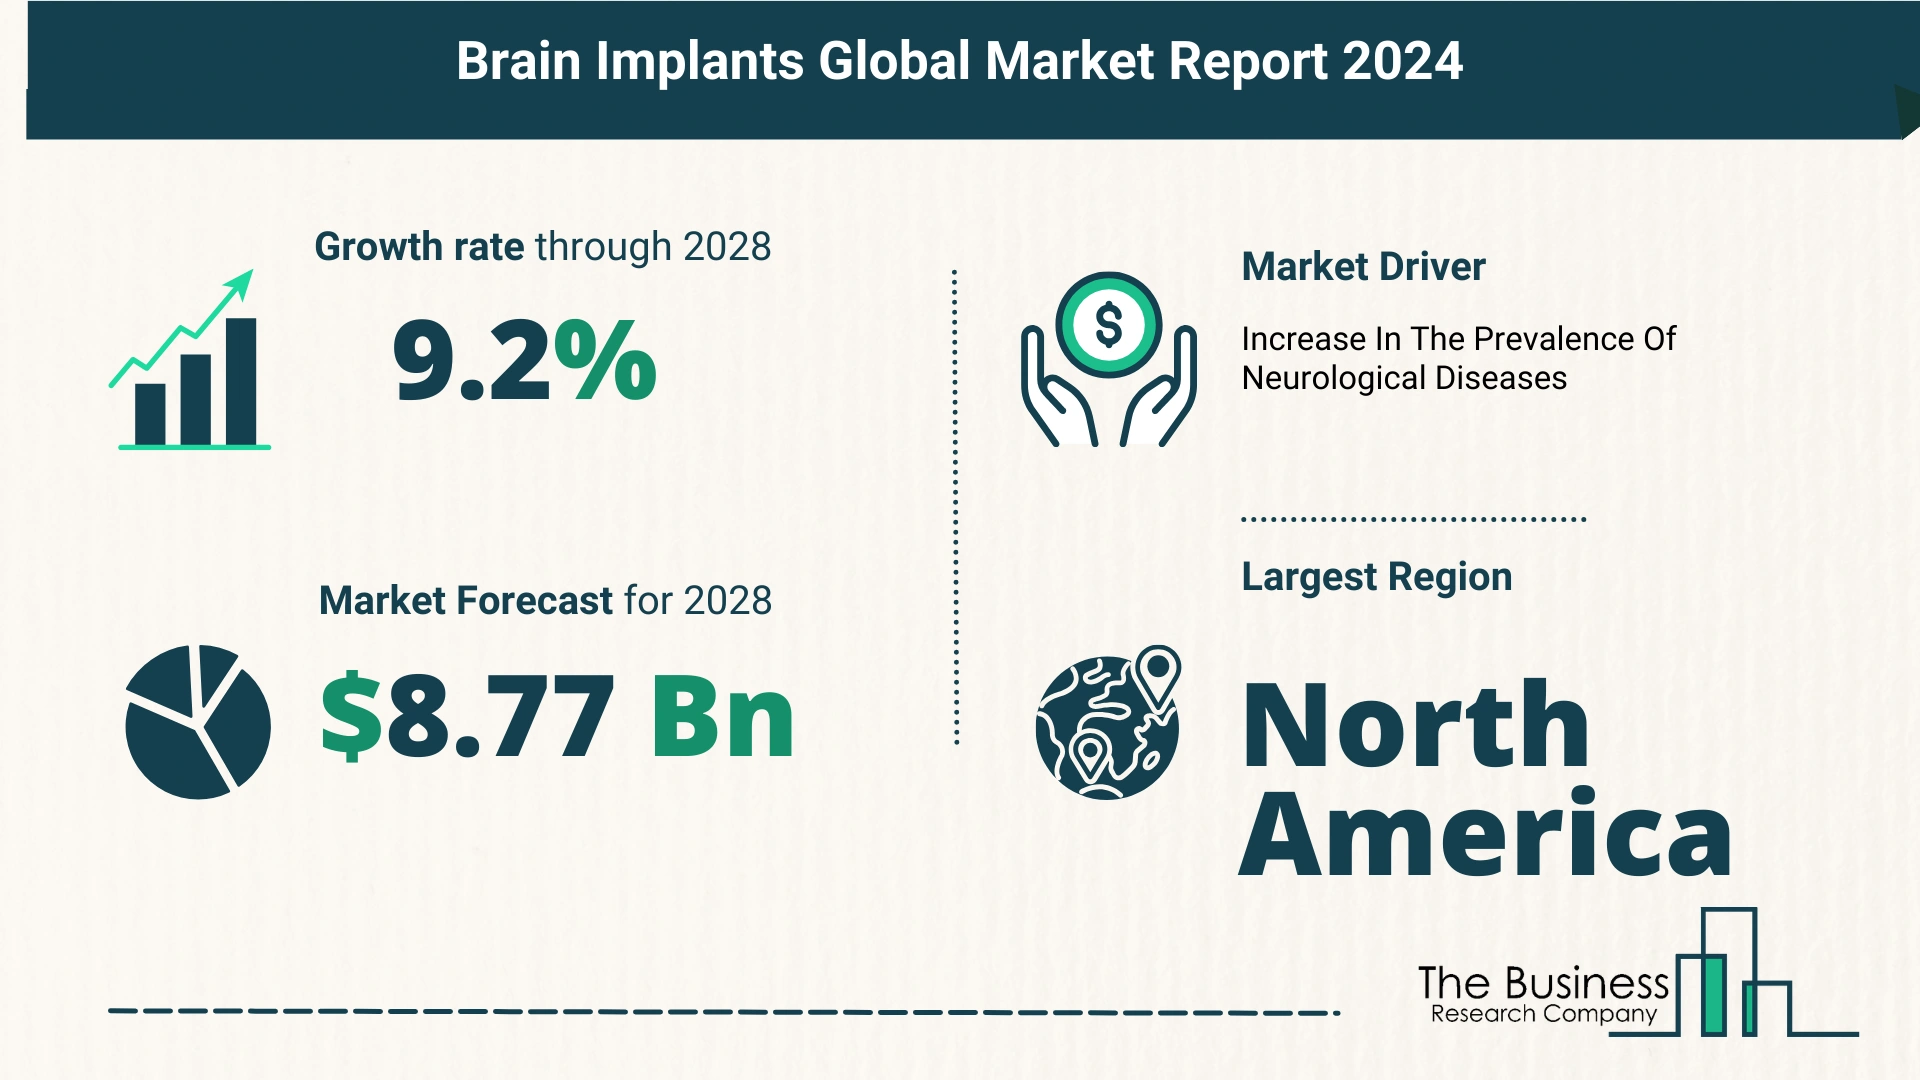 Global Brain Implants Market Size